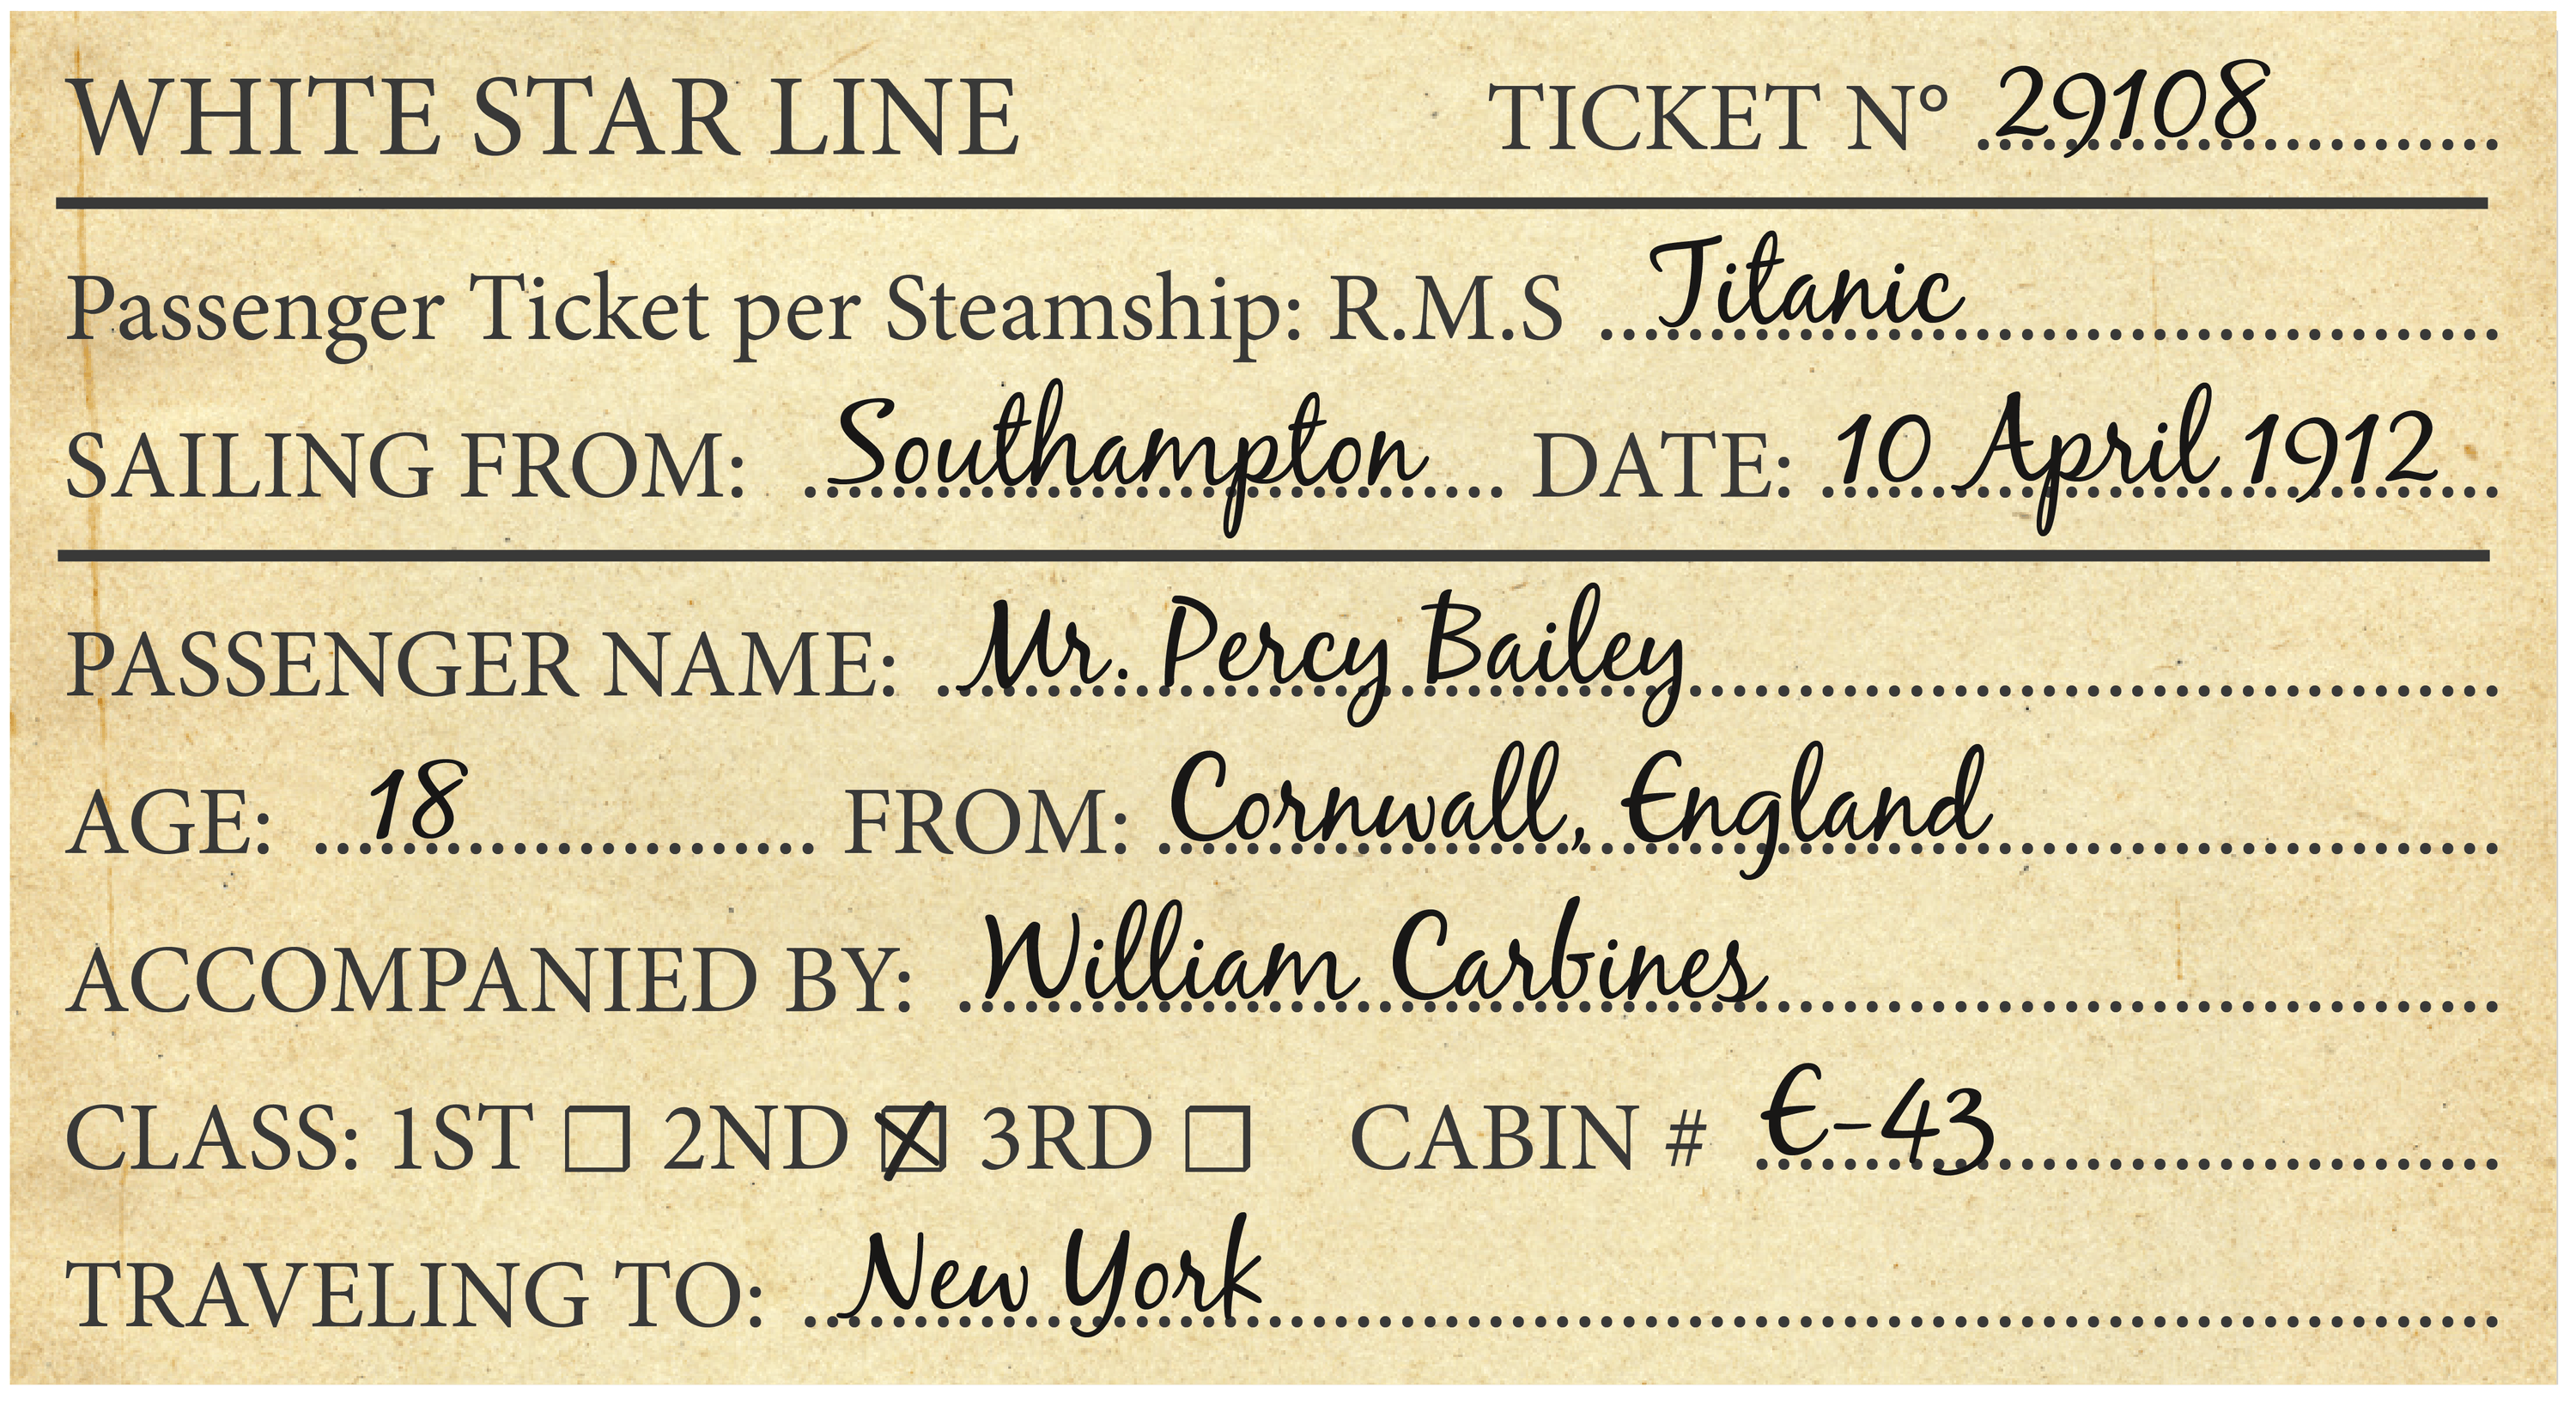 Passenger ticket